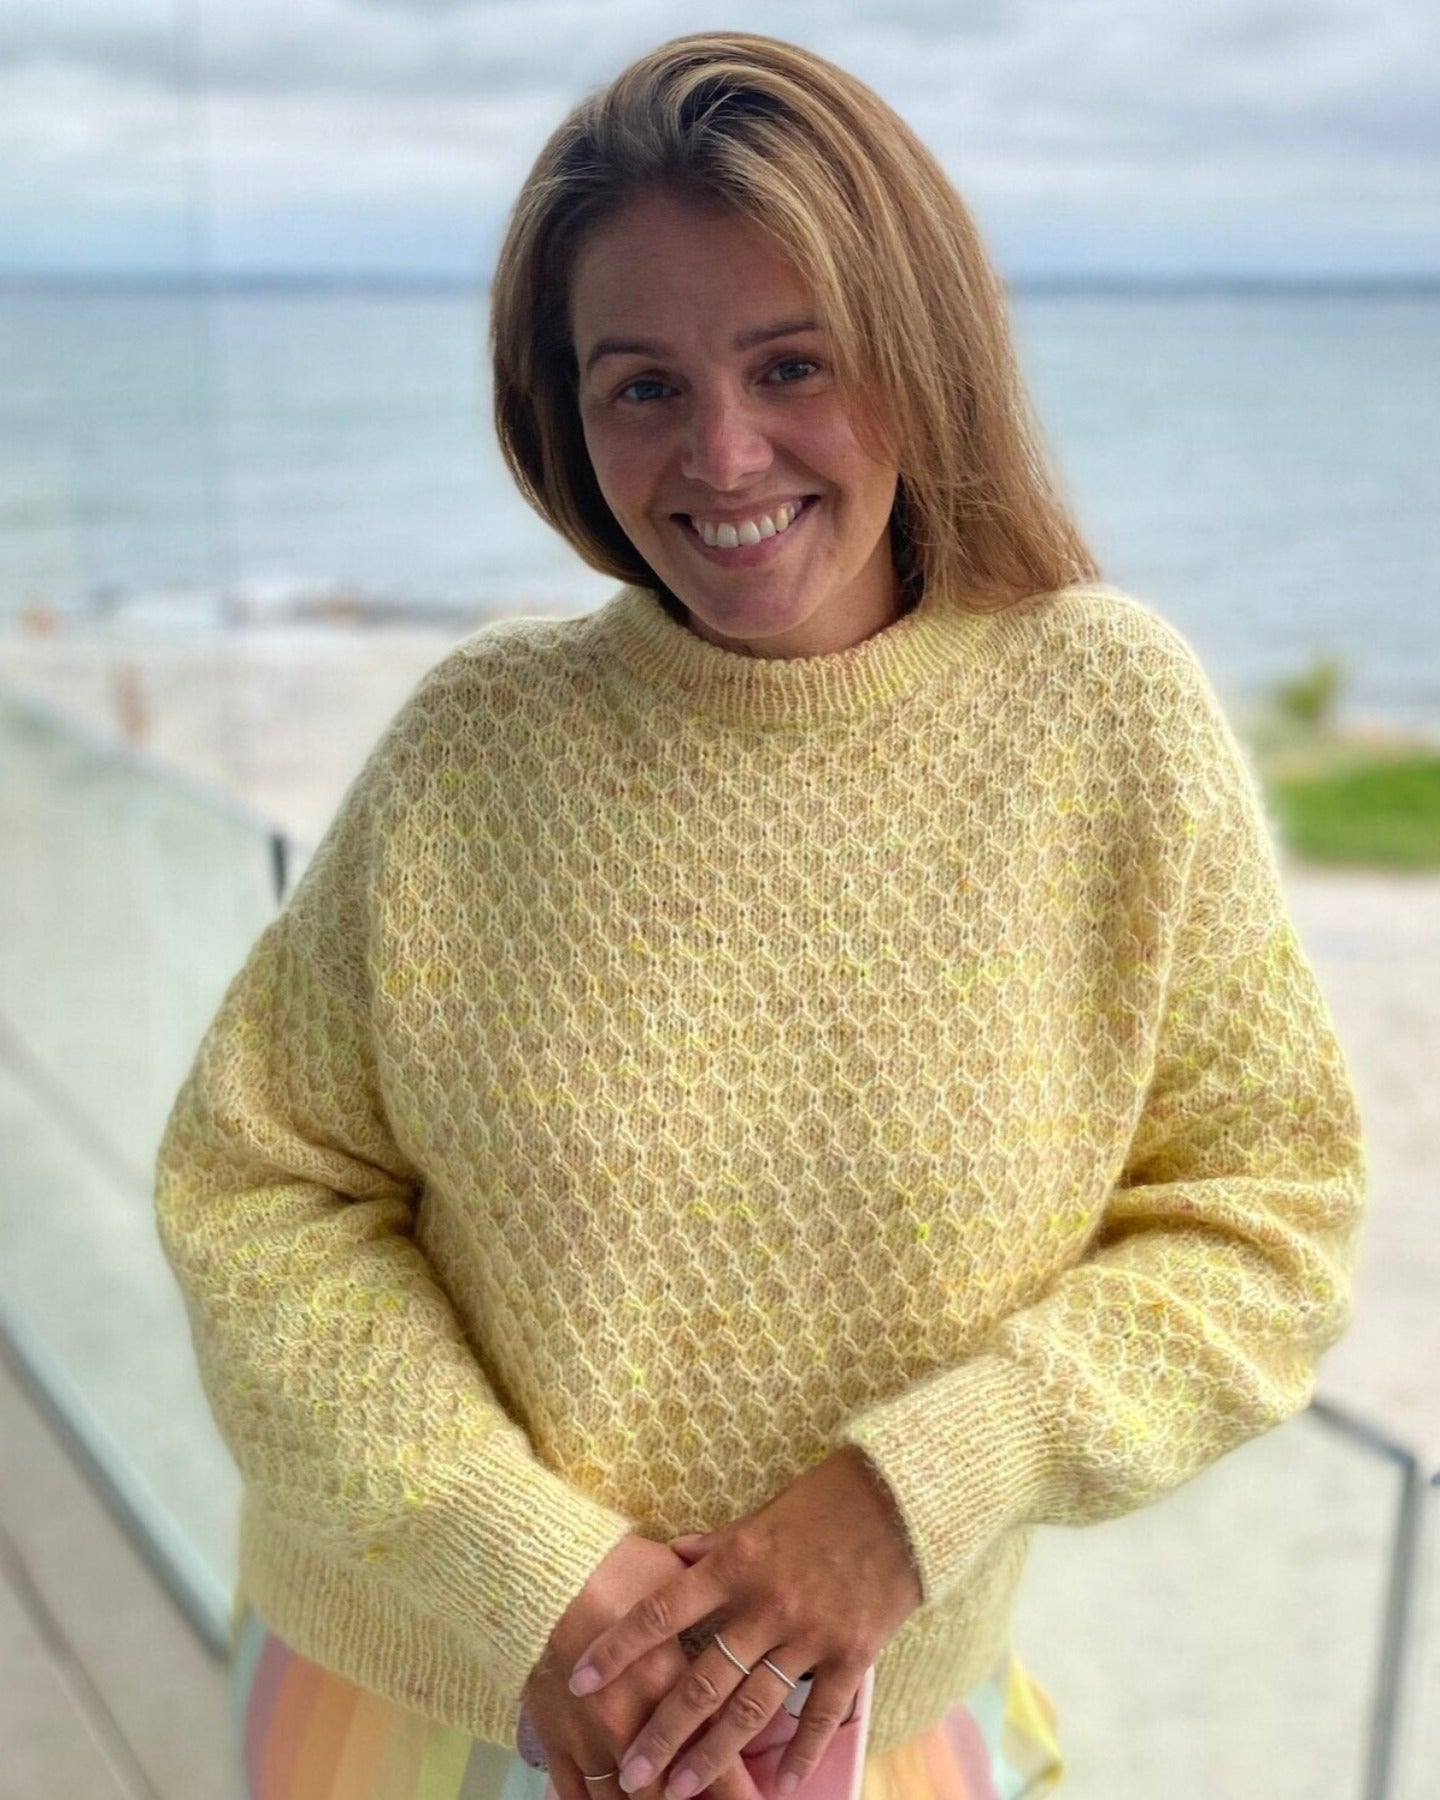 Formation Sweater English Popknit knitting pattern